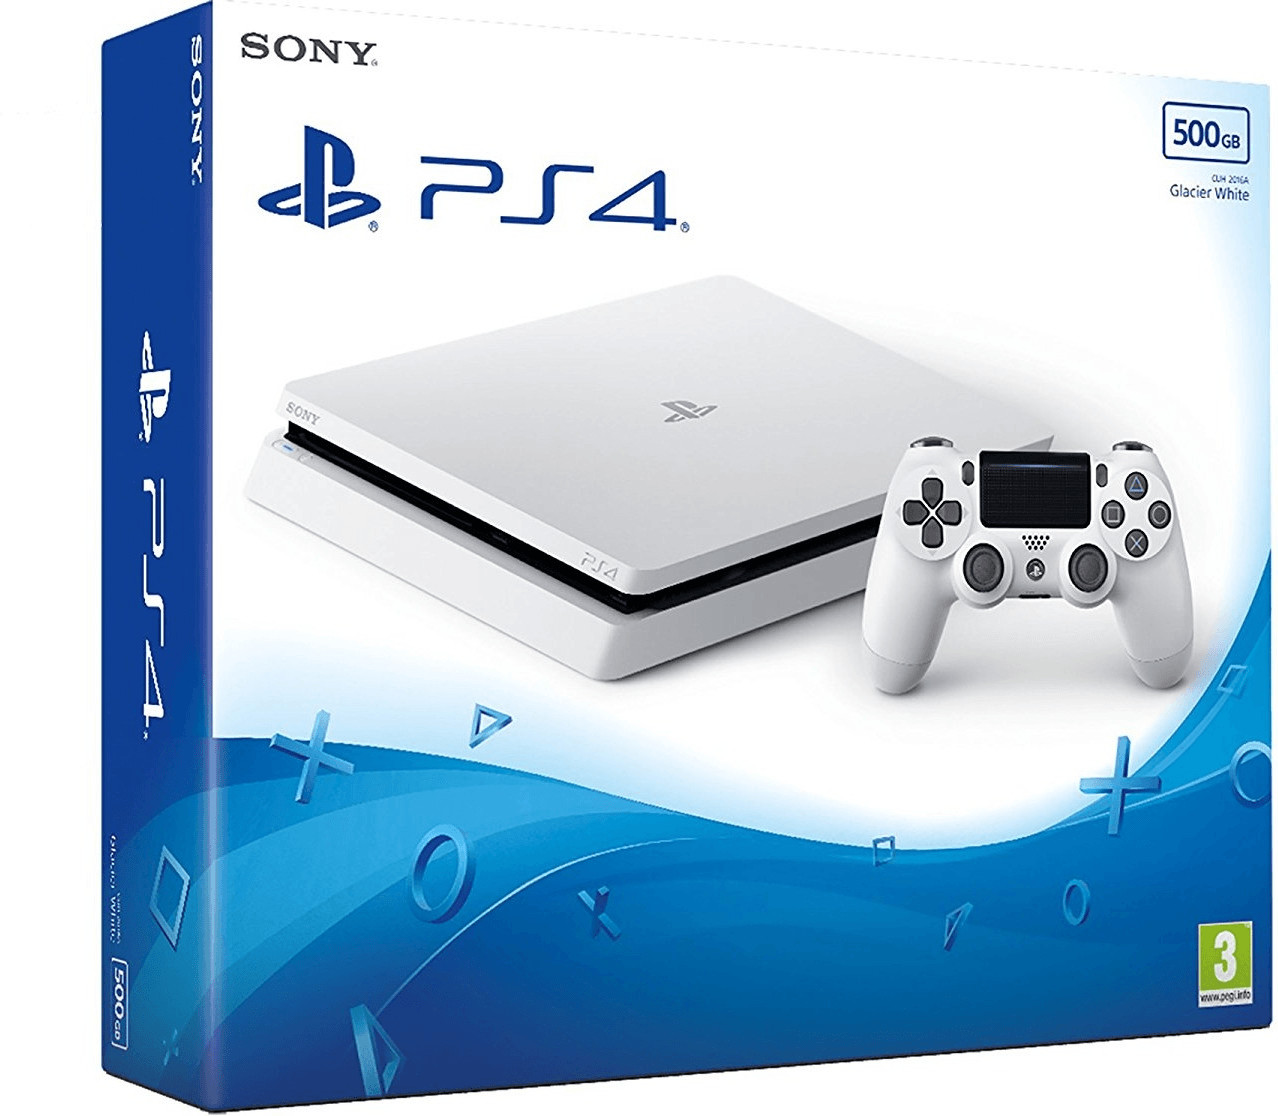 Sony PlayStation 4 (PS4) Slim 500GB glacier white desde 988,88